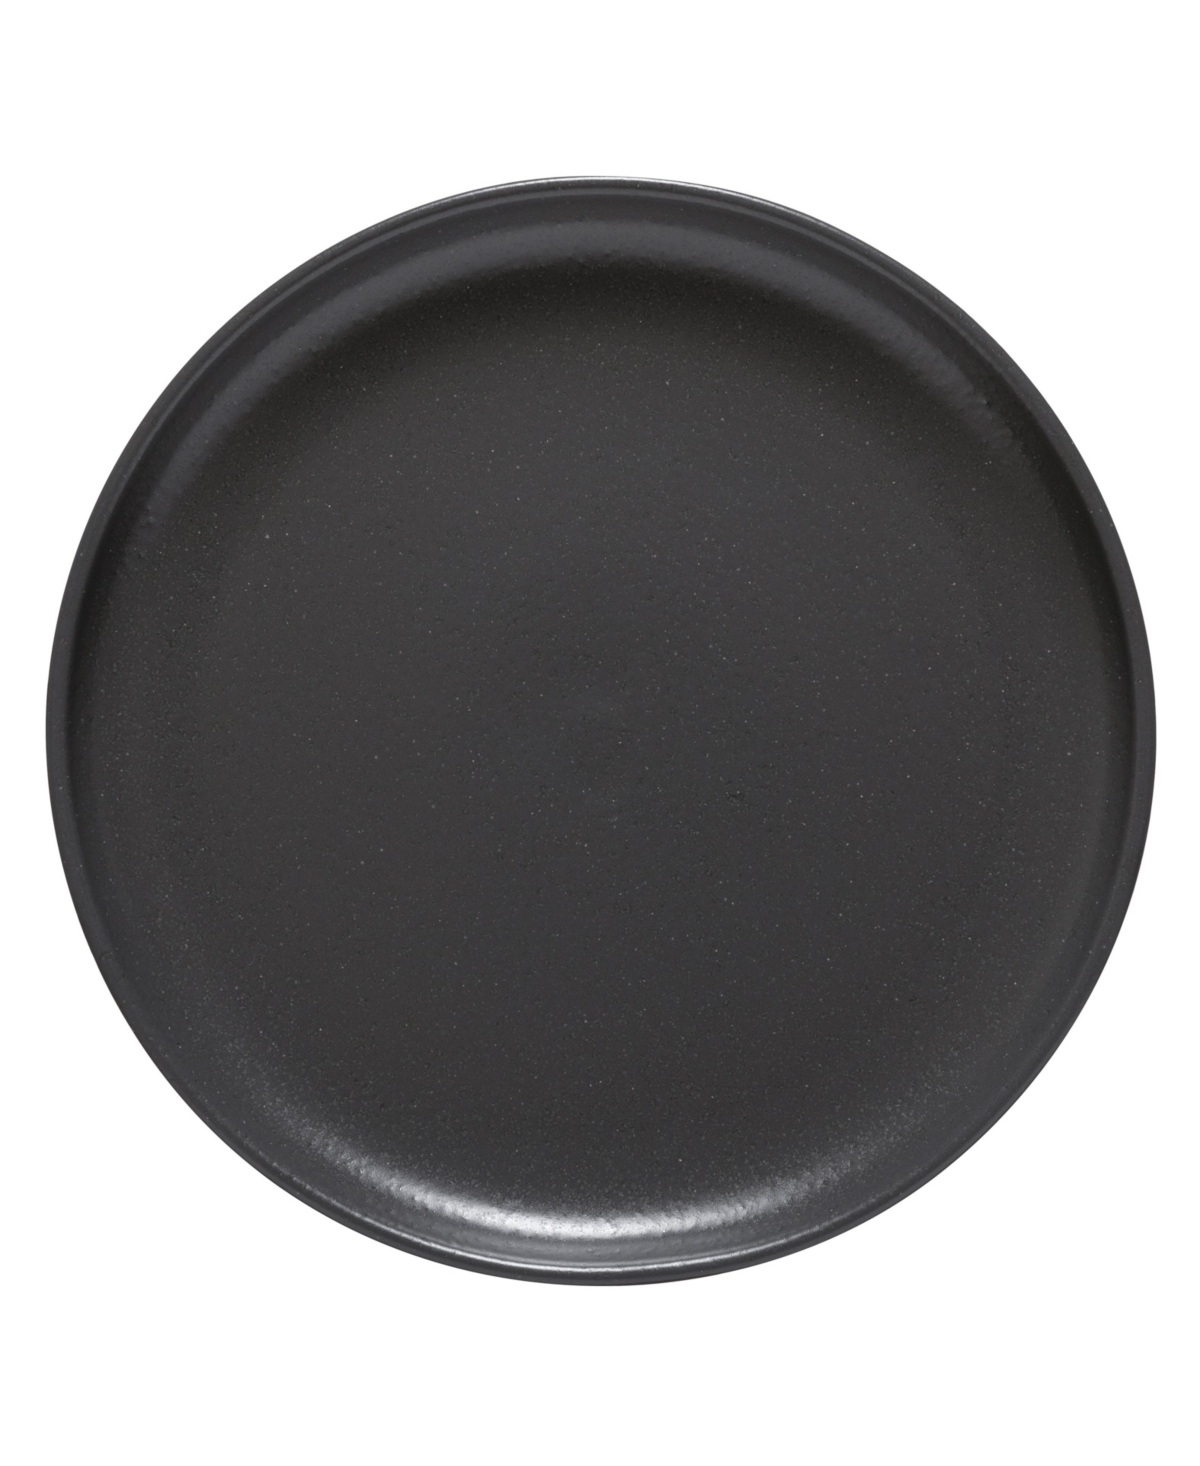 Pacifica Dinner Plate 11" - Arichoke Green